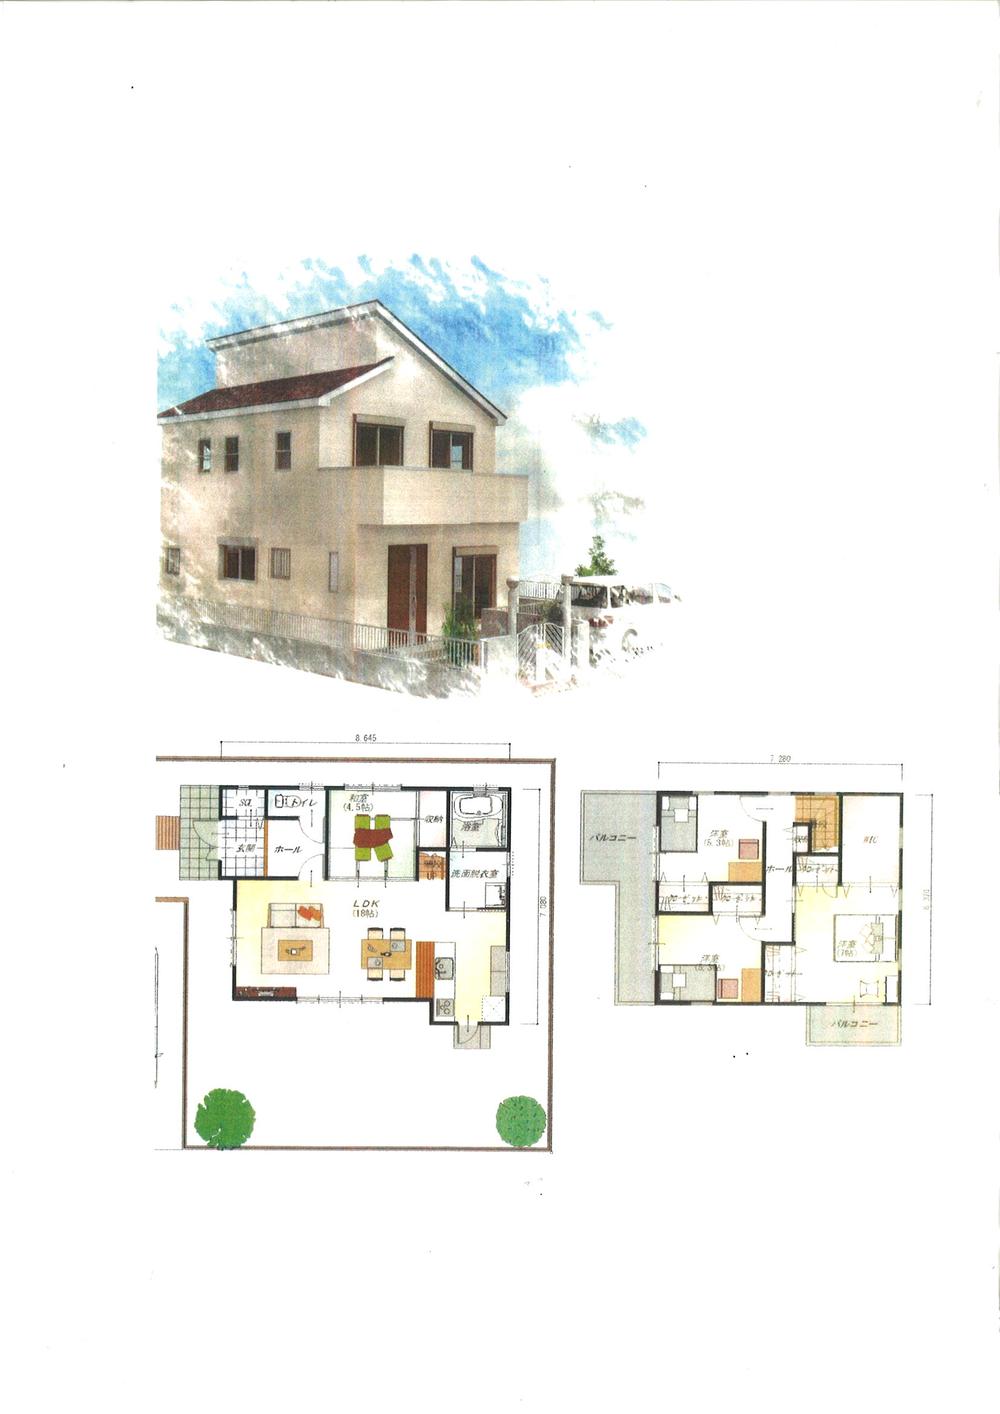 Building plan example (floor plan). Building area 101.43 sq m